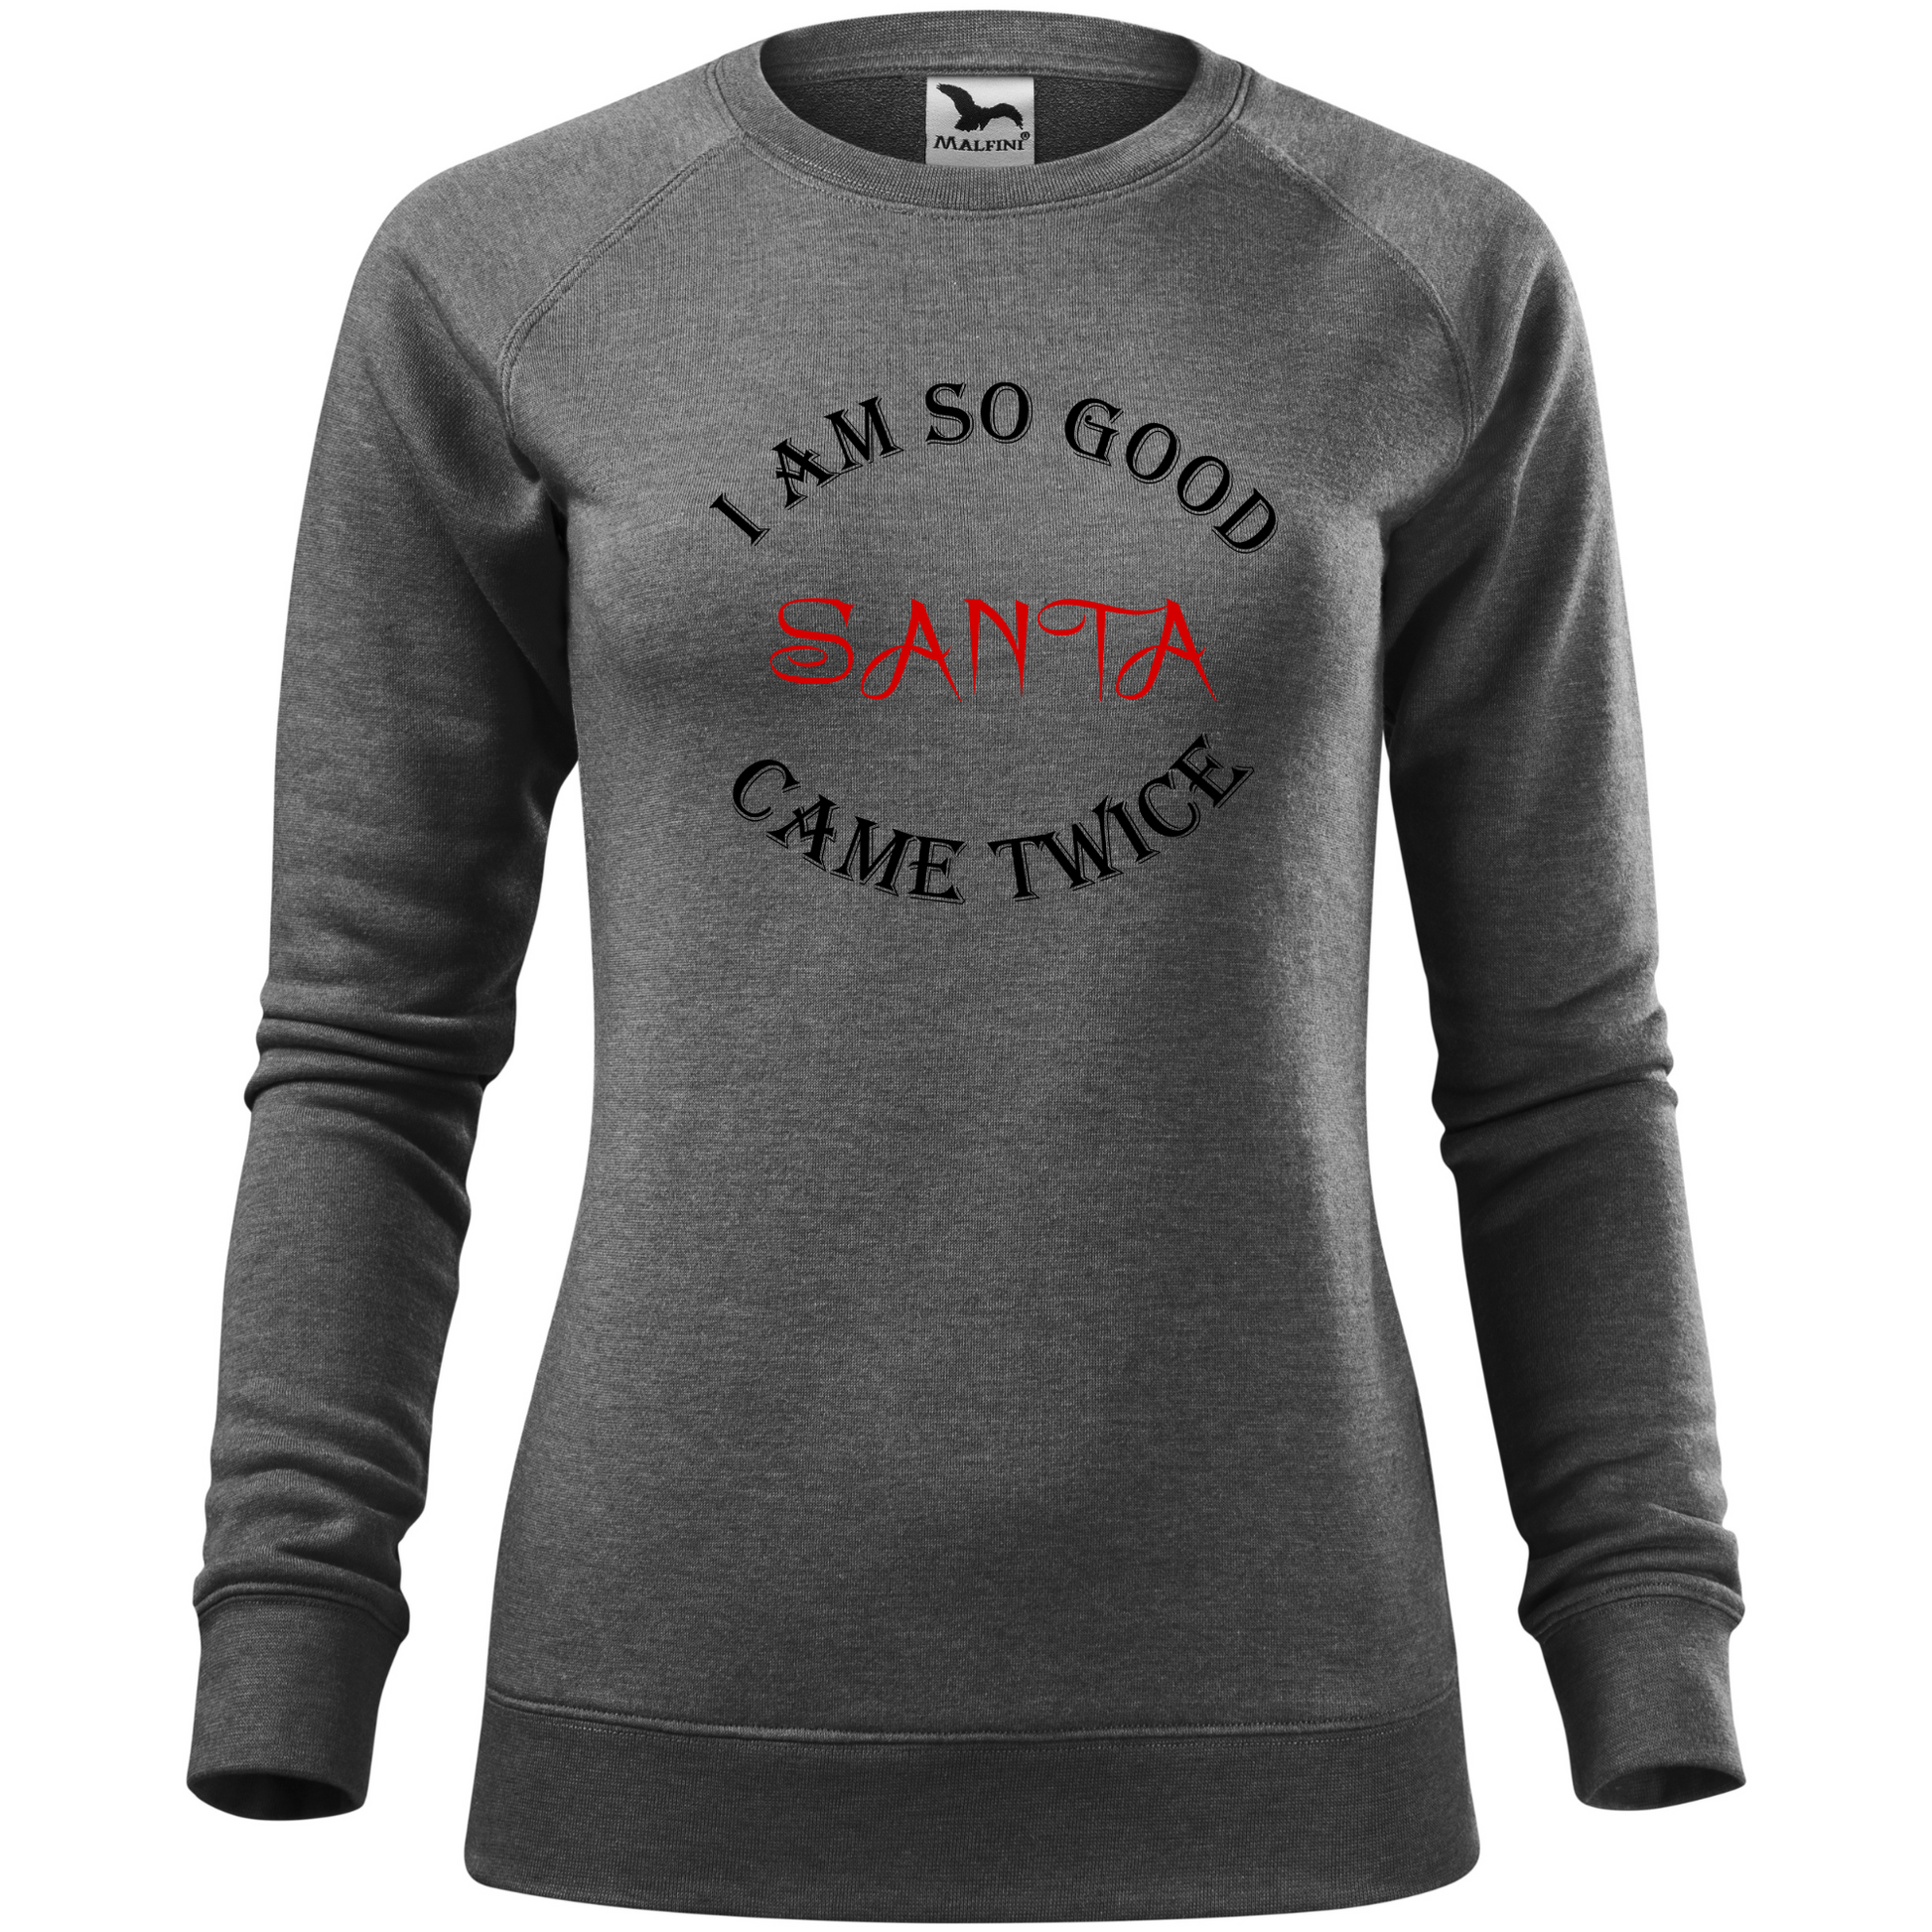 Bluza personalizata Crăciun cu textul I'm so good santa came twice